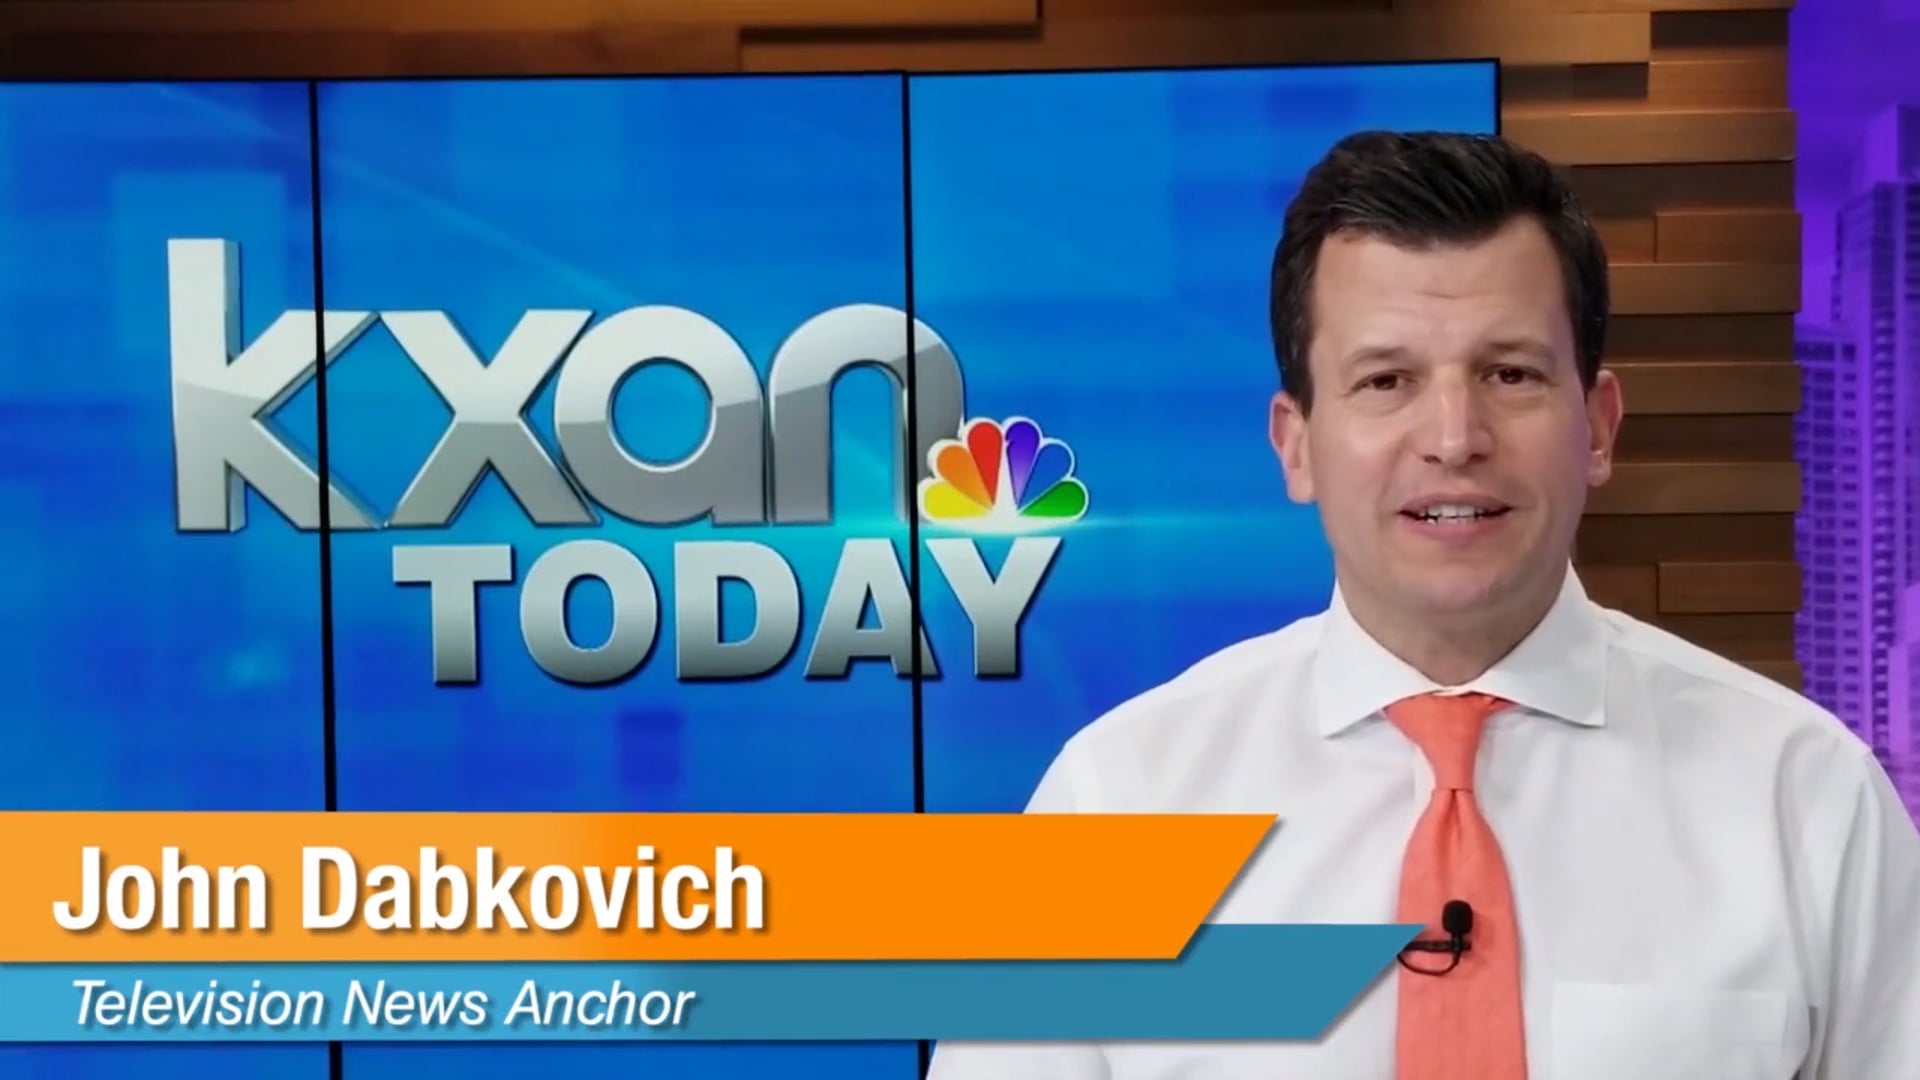 Current Job - TV News Anchor - John Dabkovich